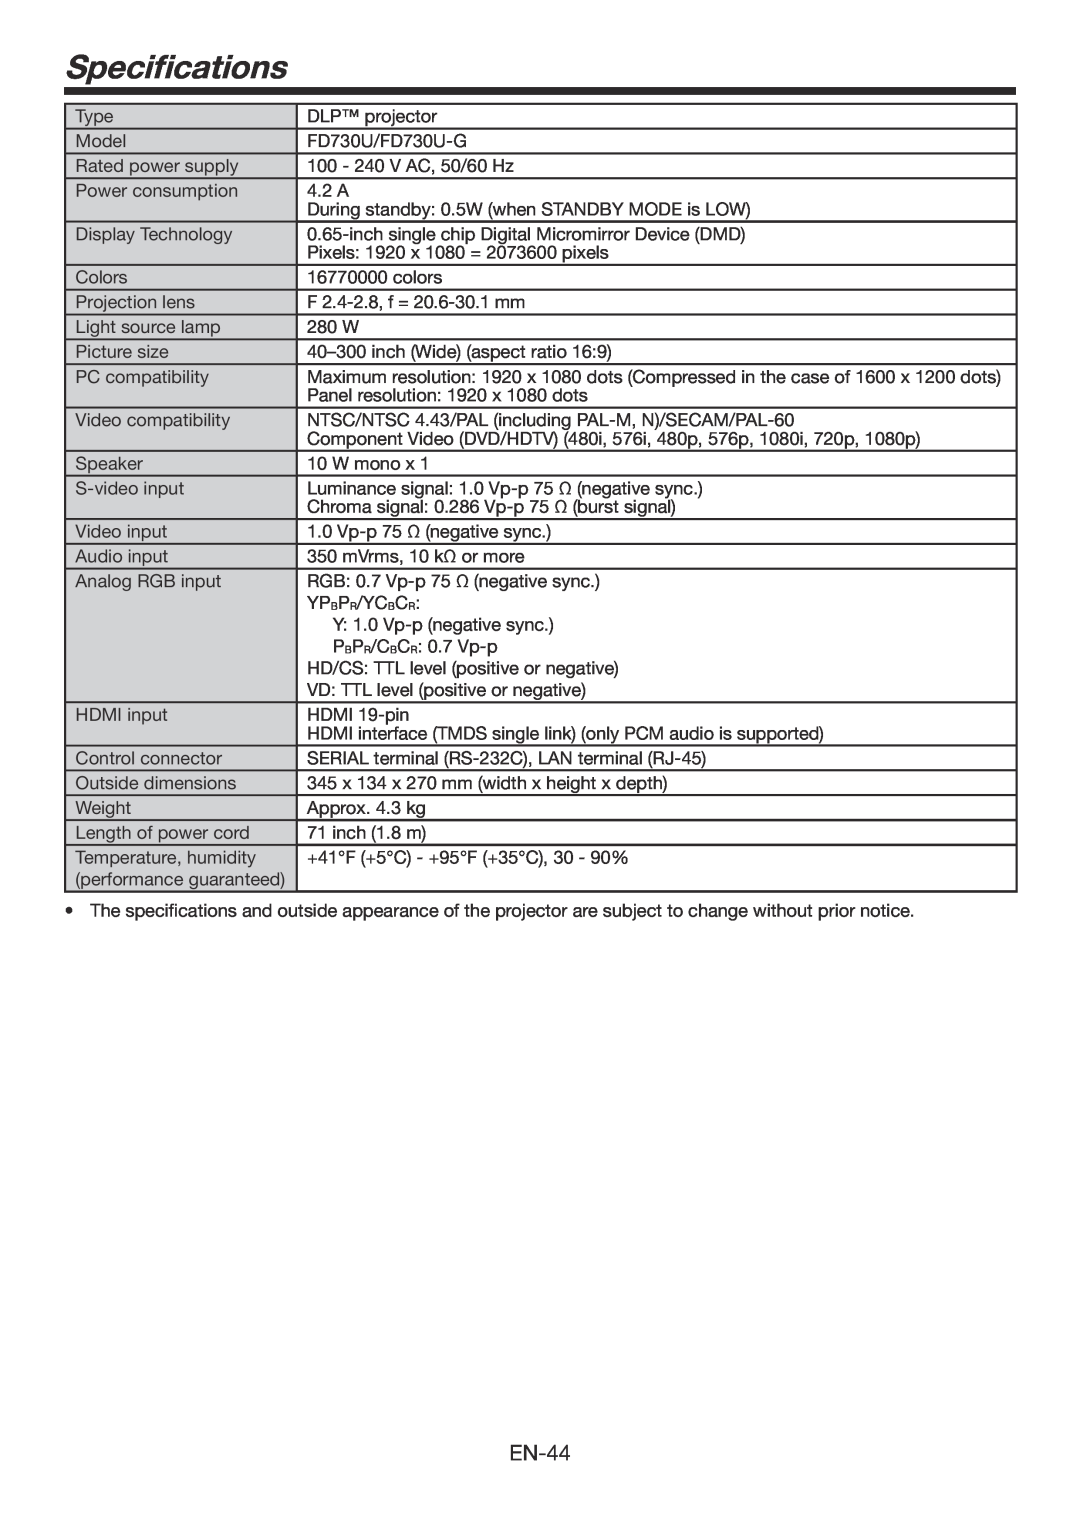 Mitsubishi Electronics FD730U-G user manual Specifications, EN-44 